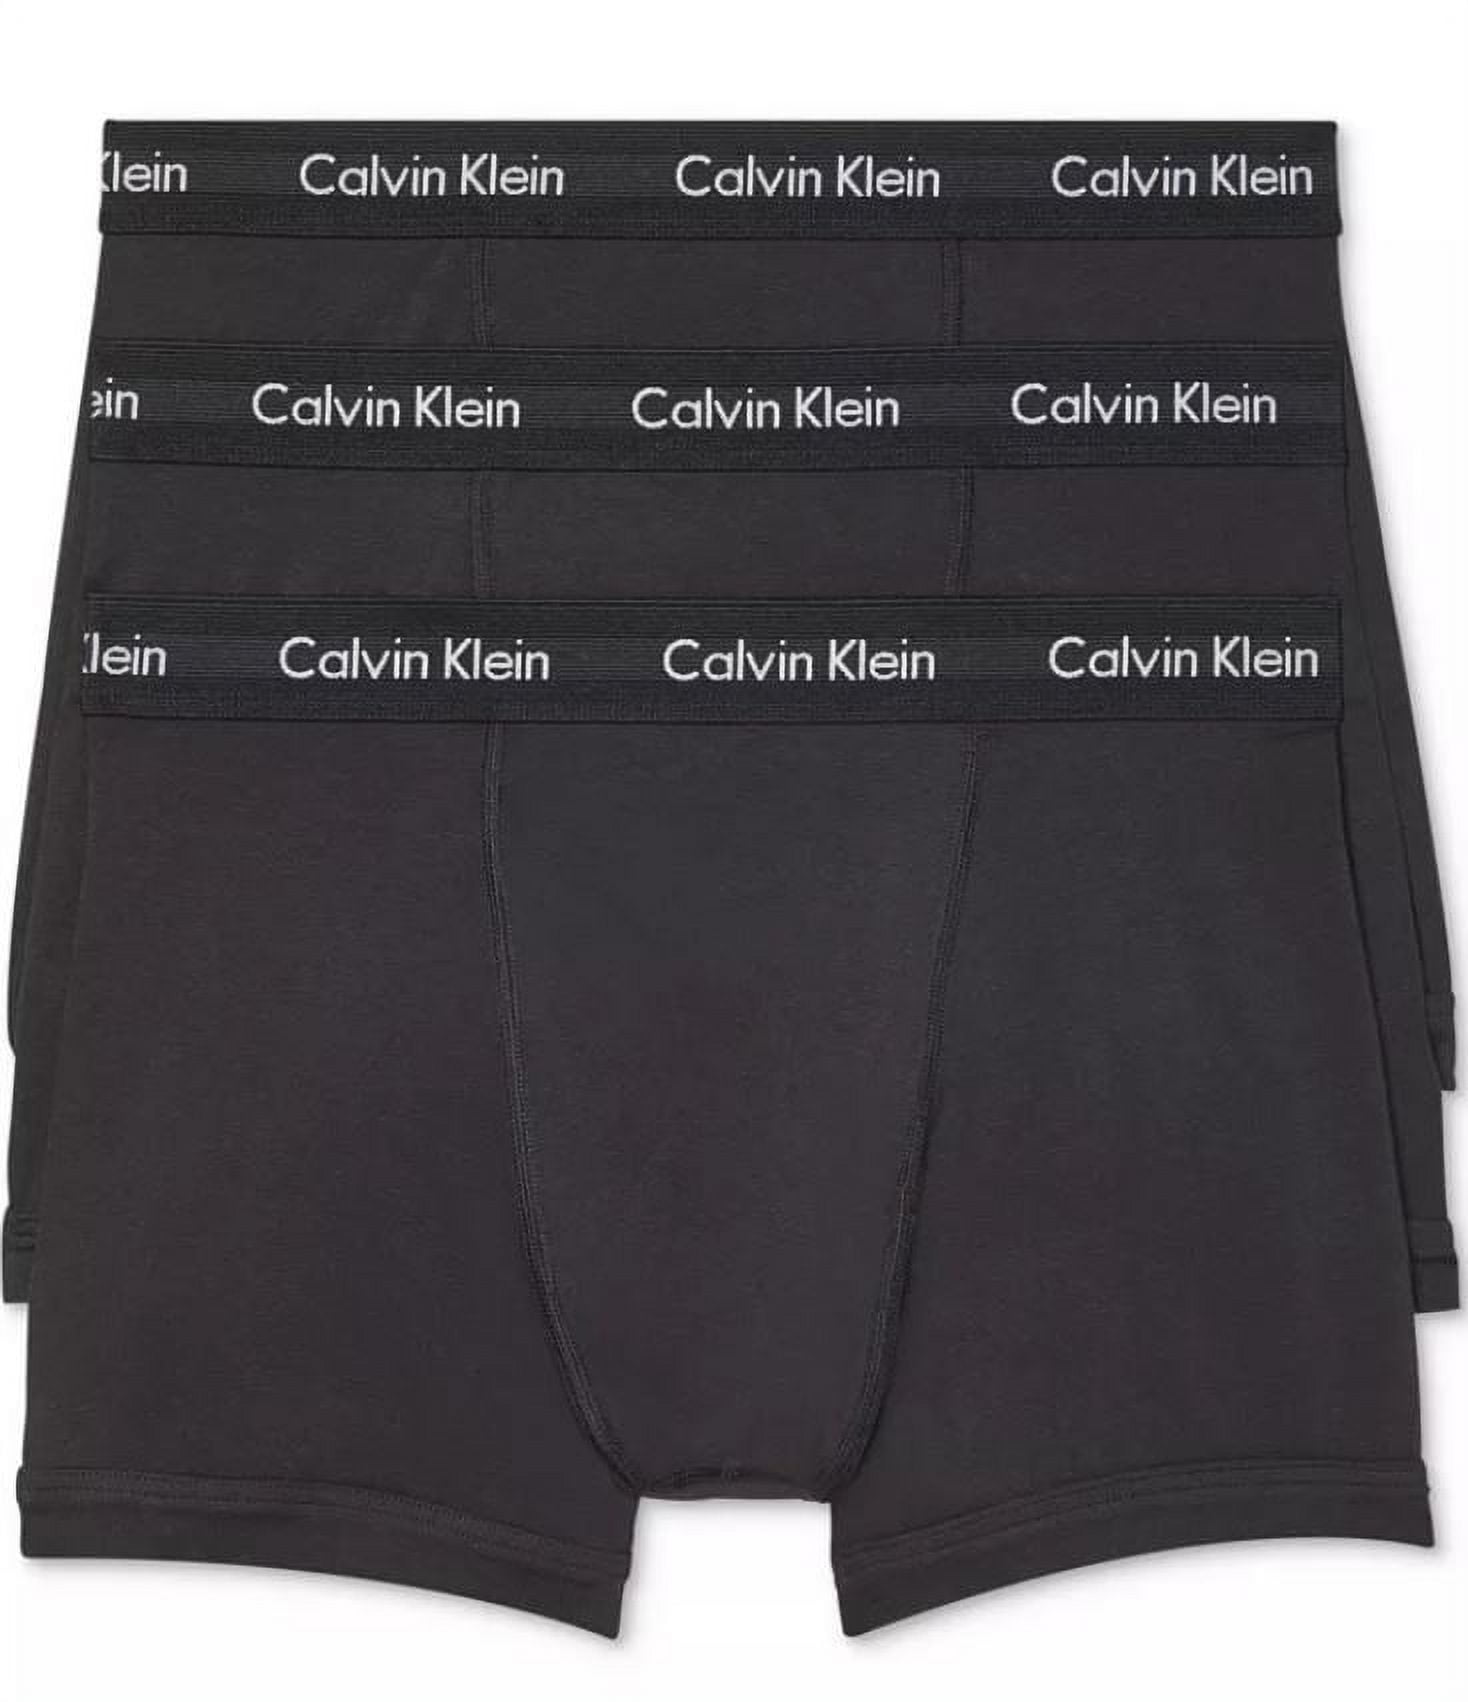 Calvin Klein Men's Black 3-Pack Cotton Stretch Boxer Briefs, Large